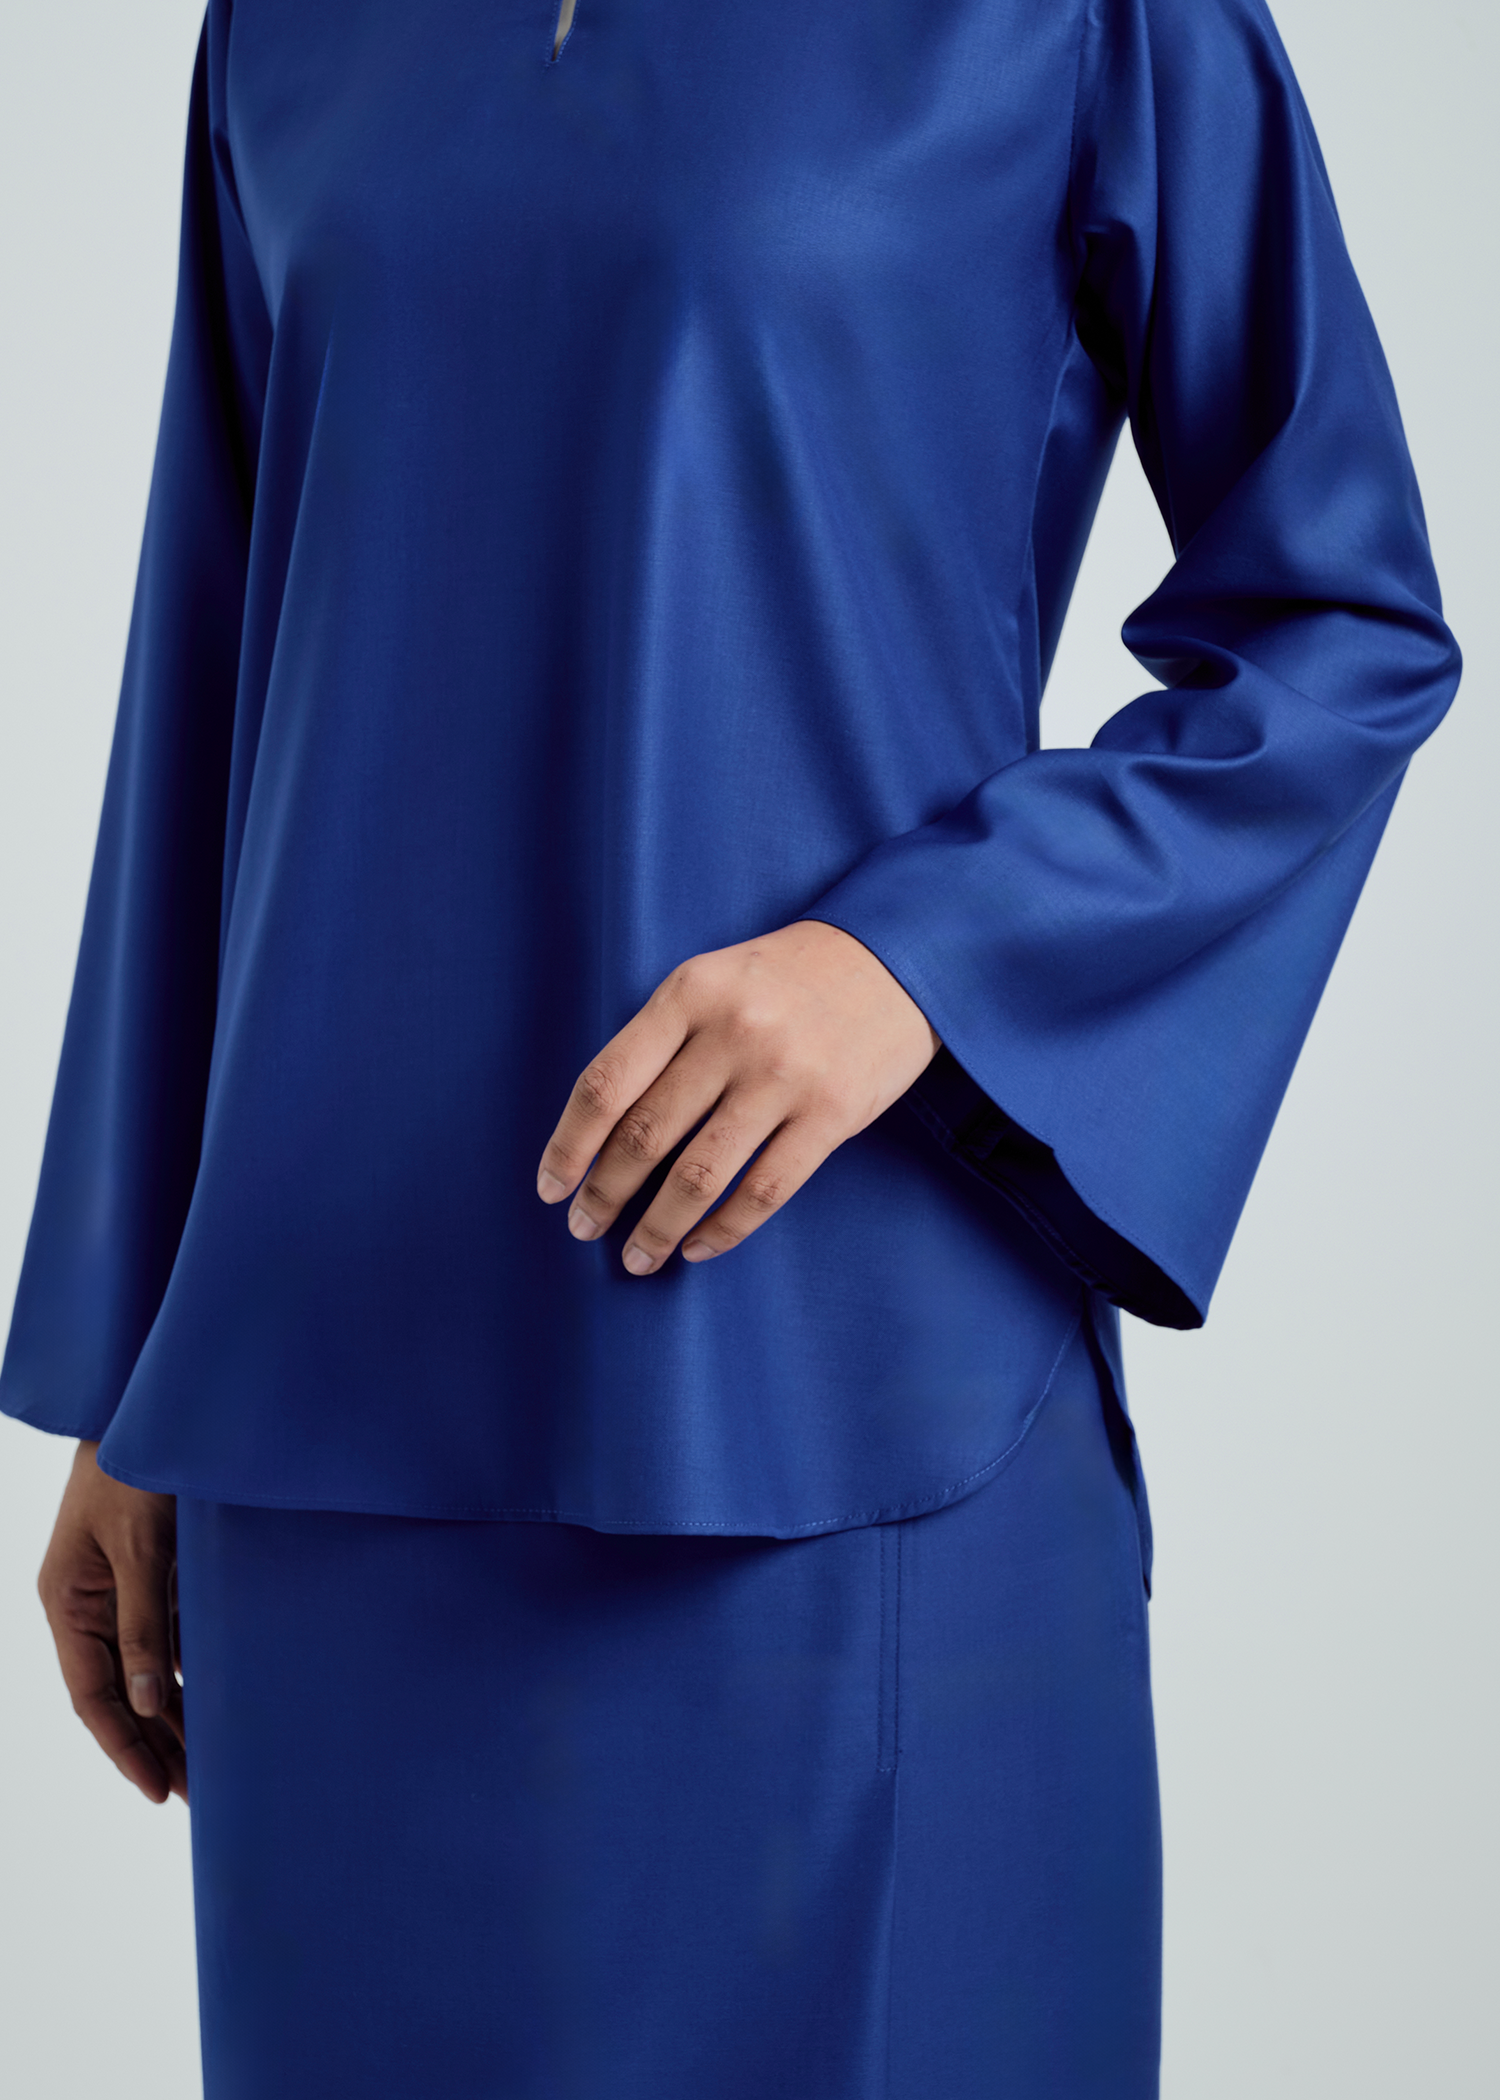 Patawali Baju Kurung - Royal Blue